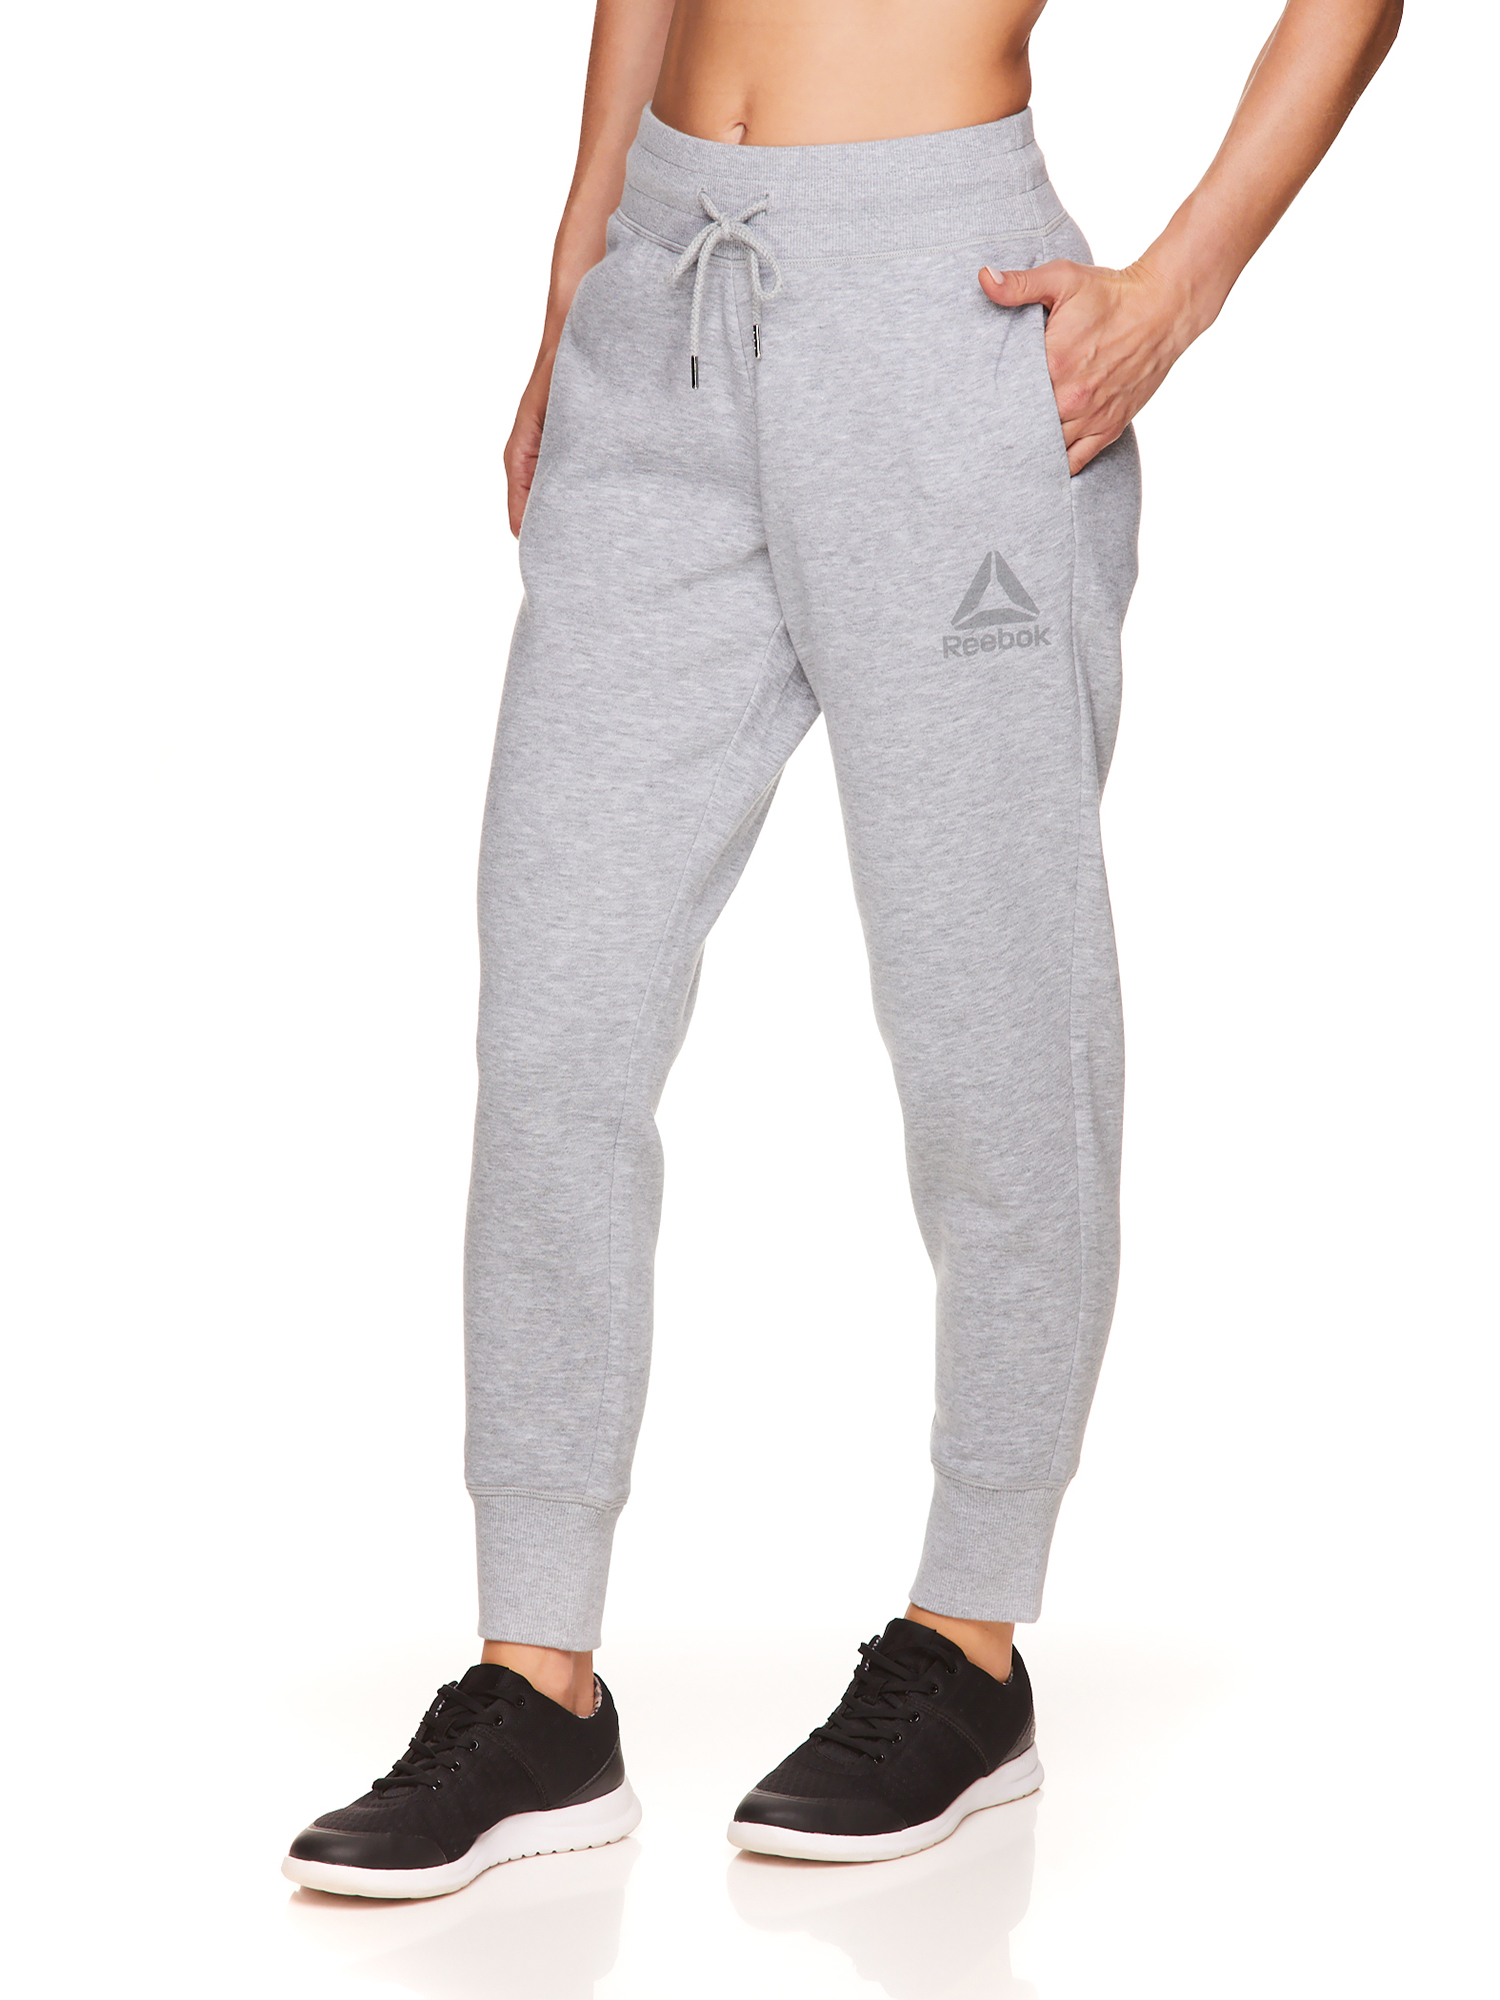 Reebok Womens' Cozy Fleece Jogger Sweatpants with Pockets - image 2 of 4